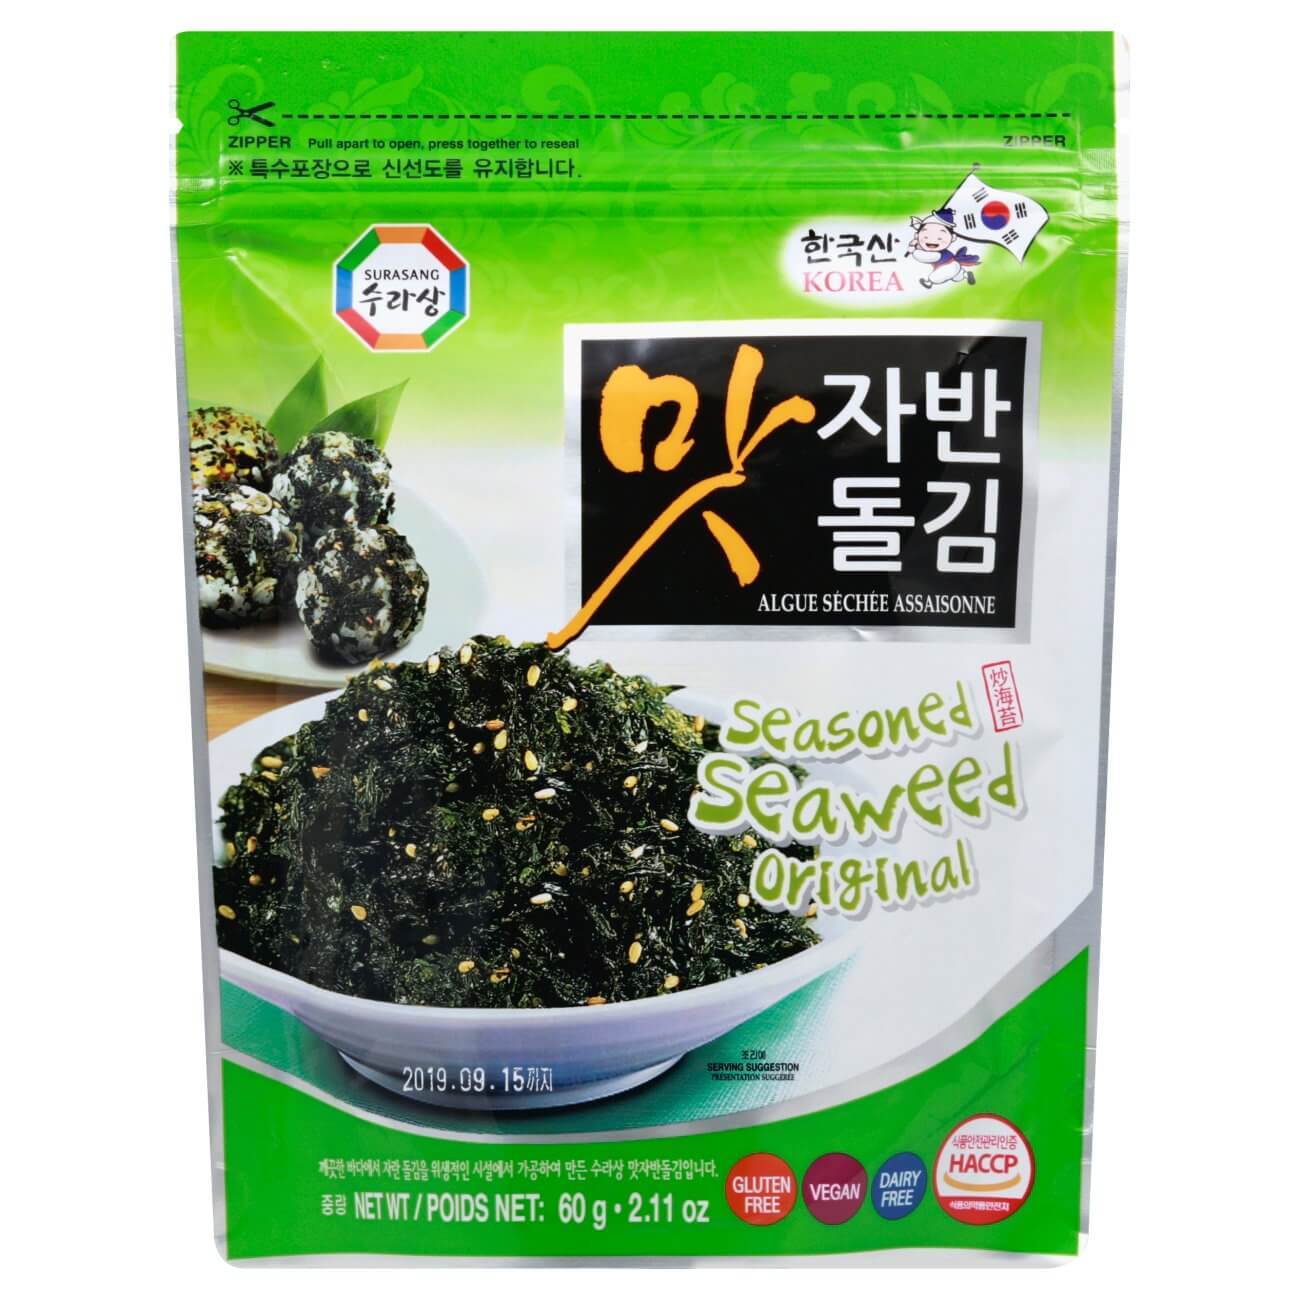 Surasang Seasoned Seaweed (original flavor) - 60g/2.11oz-1